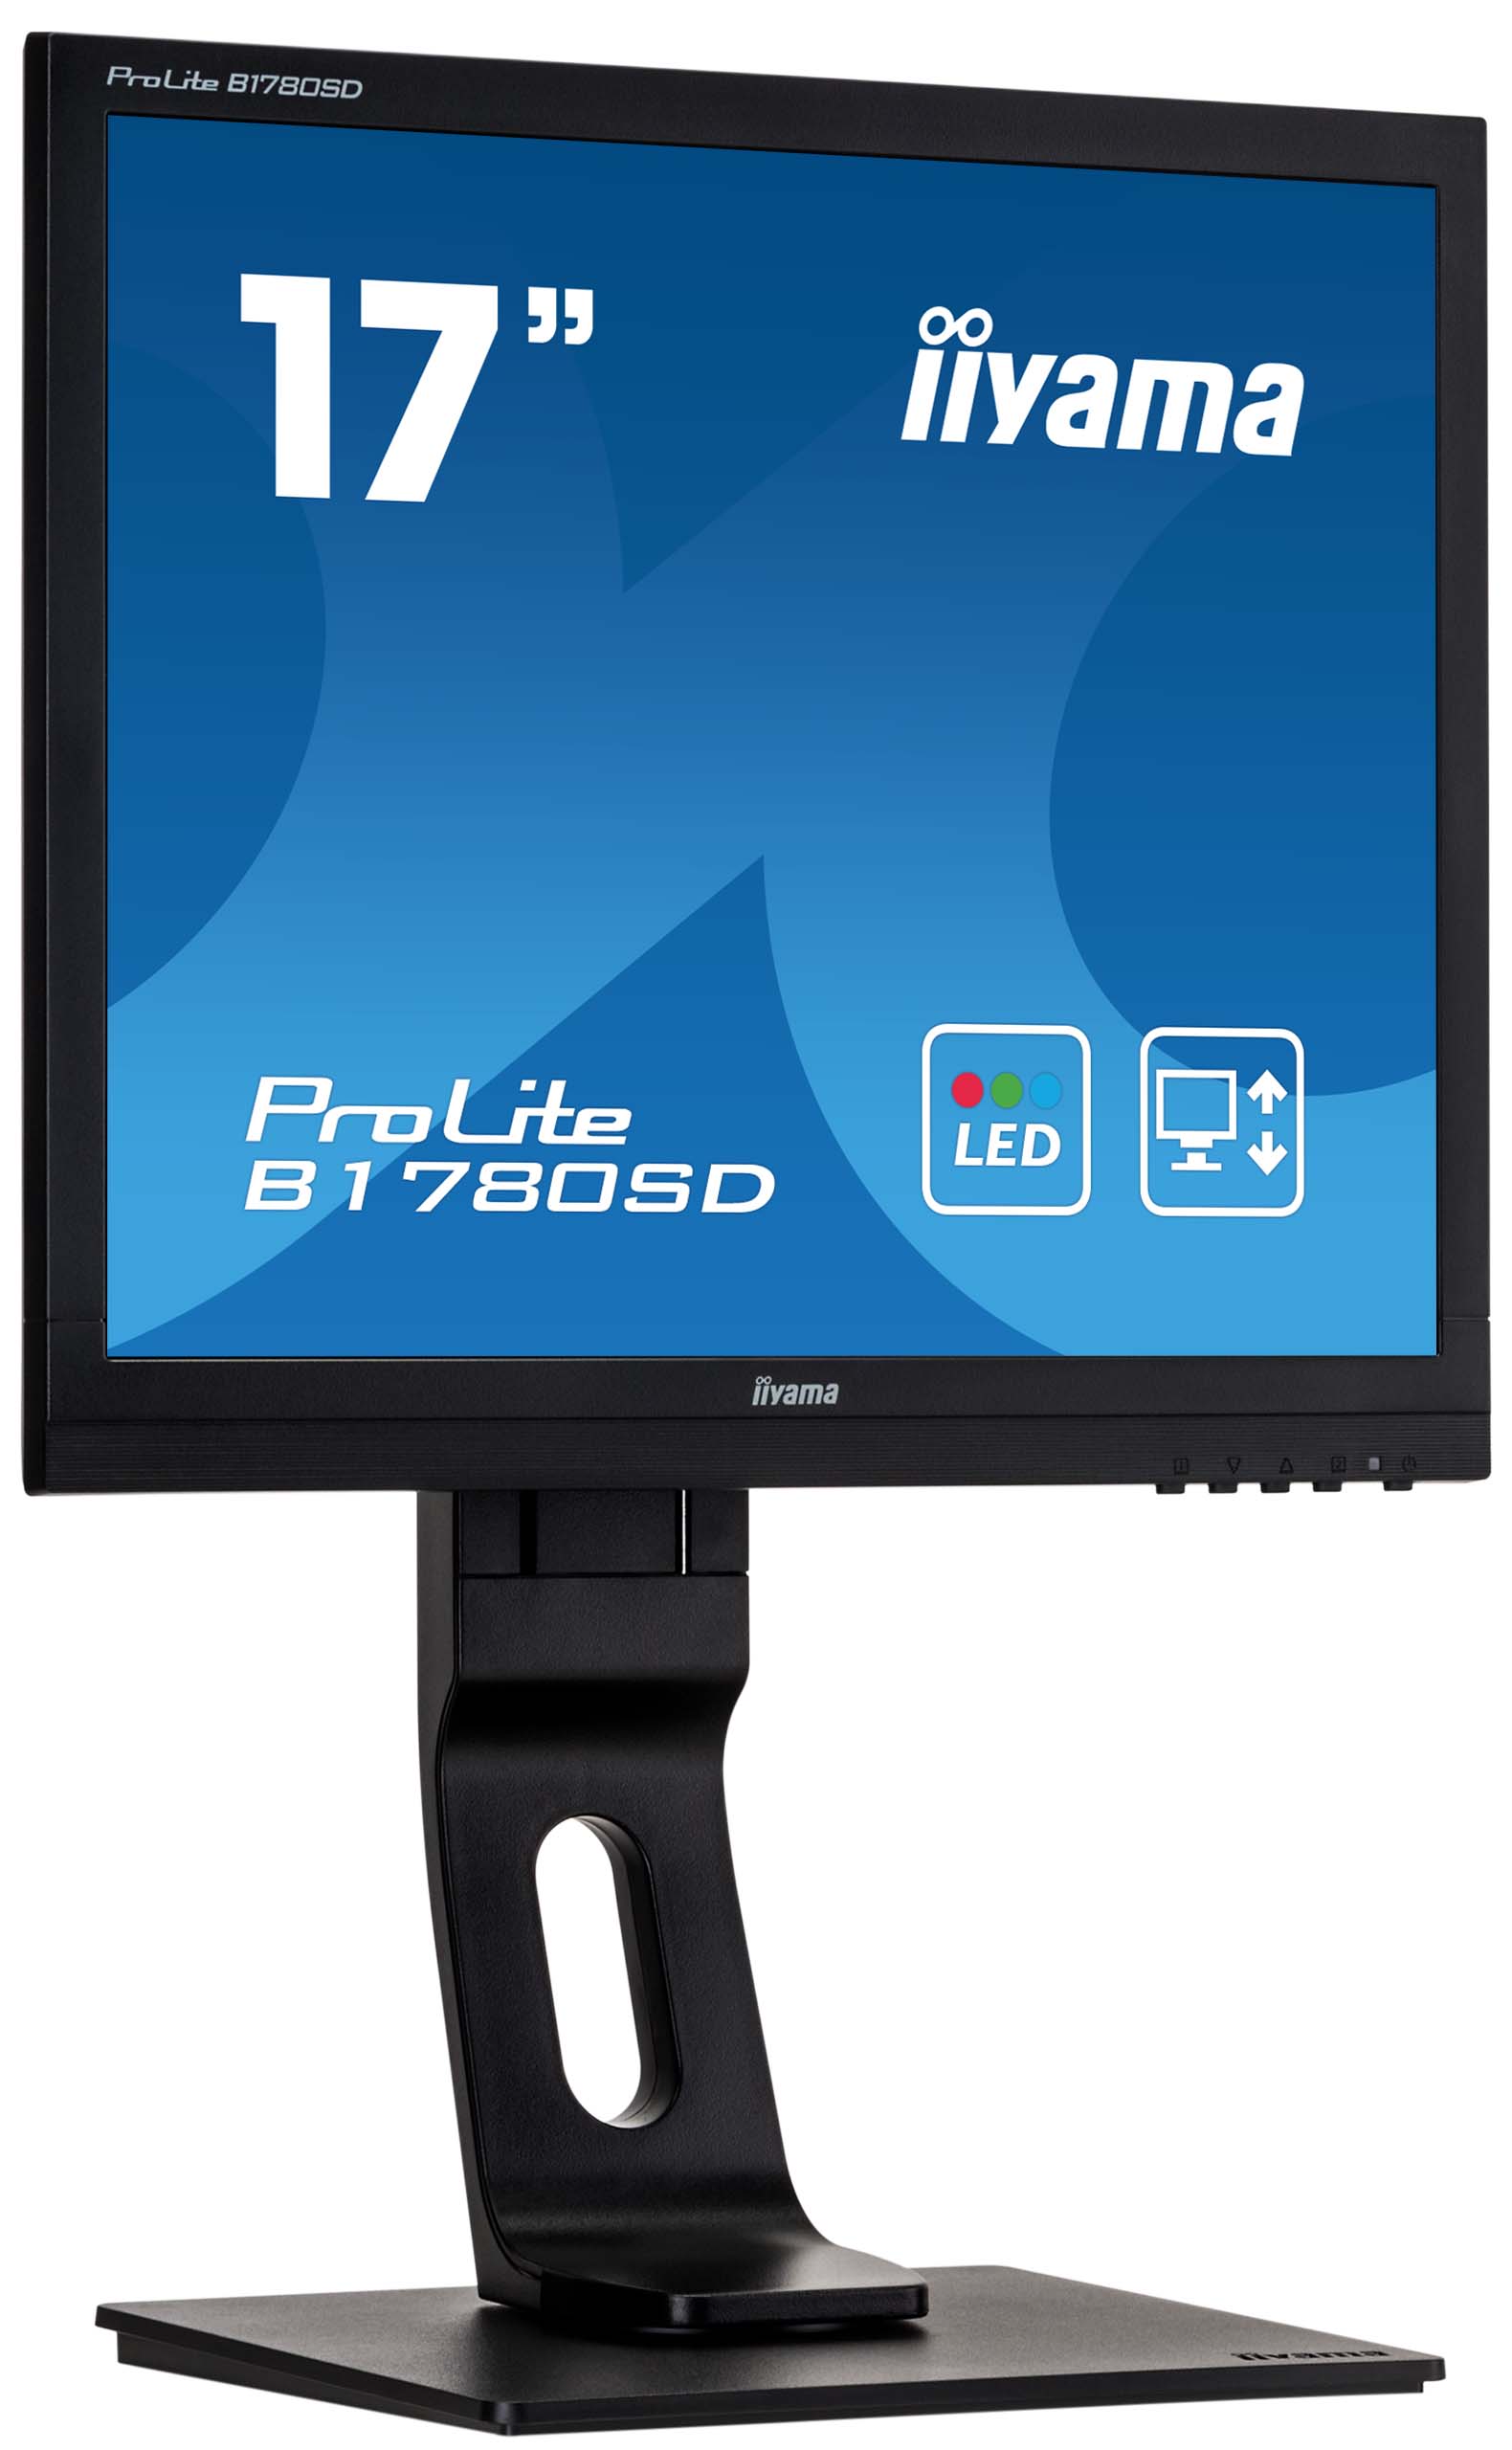 iiyama Prolite B1780SD-B1 Ecran LED 17 1280 x 1024 5 ms VGA/DVI Pied réglable en hauteur Multimedia Blanc 